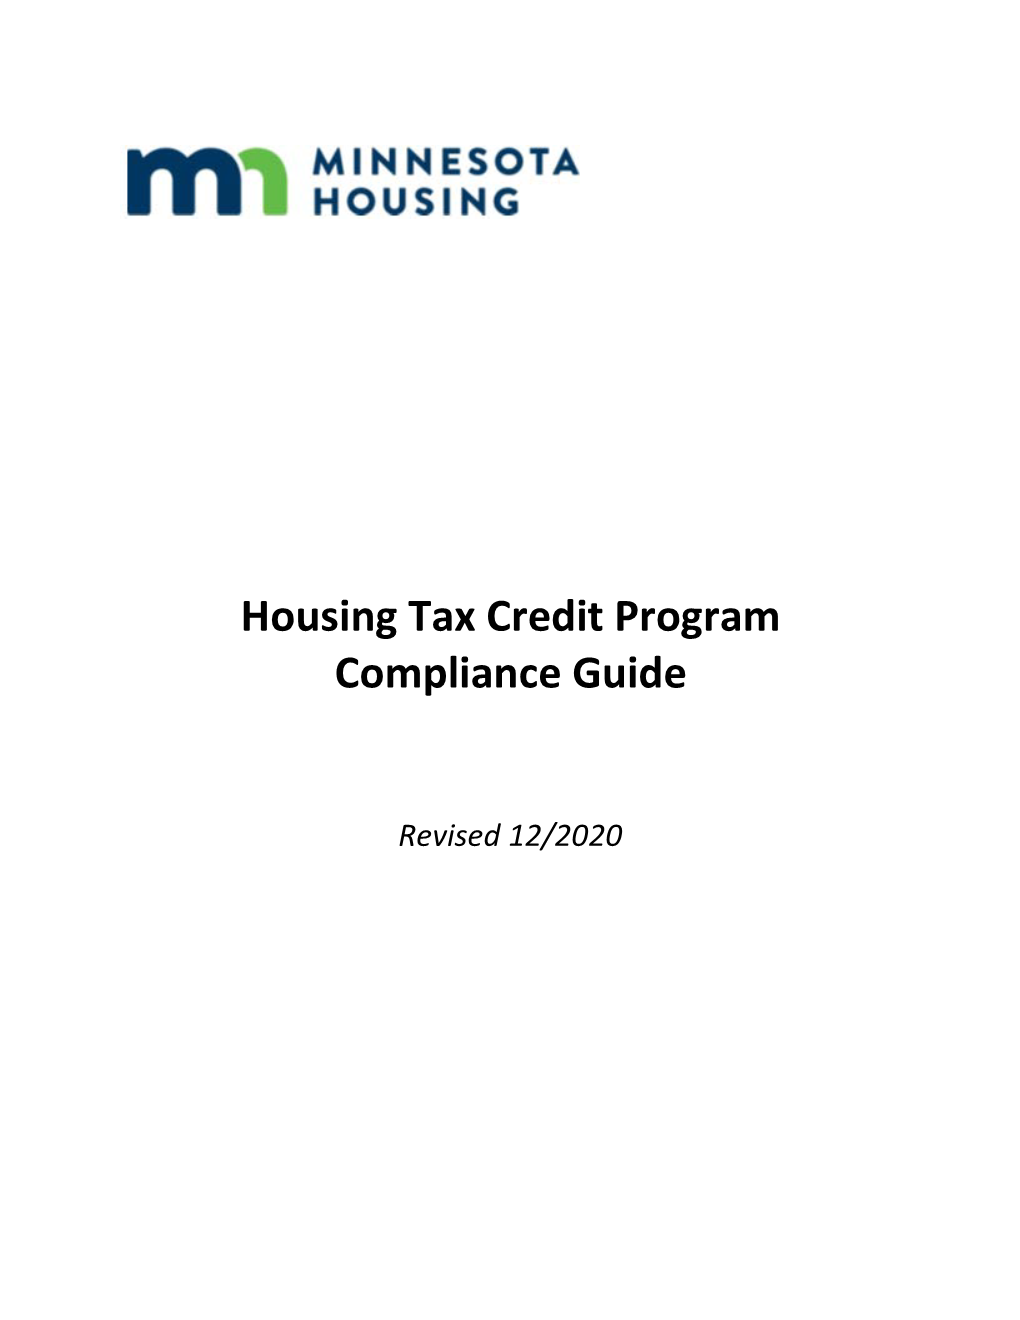 Housing Tax Credit Program Compliance Guide